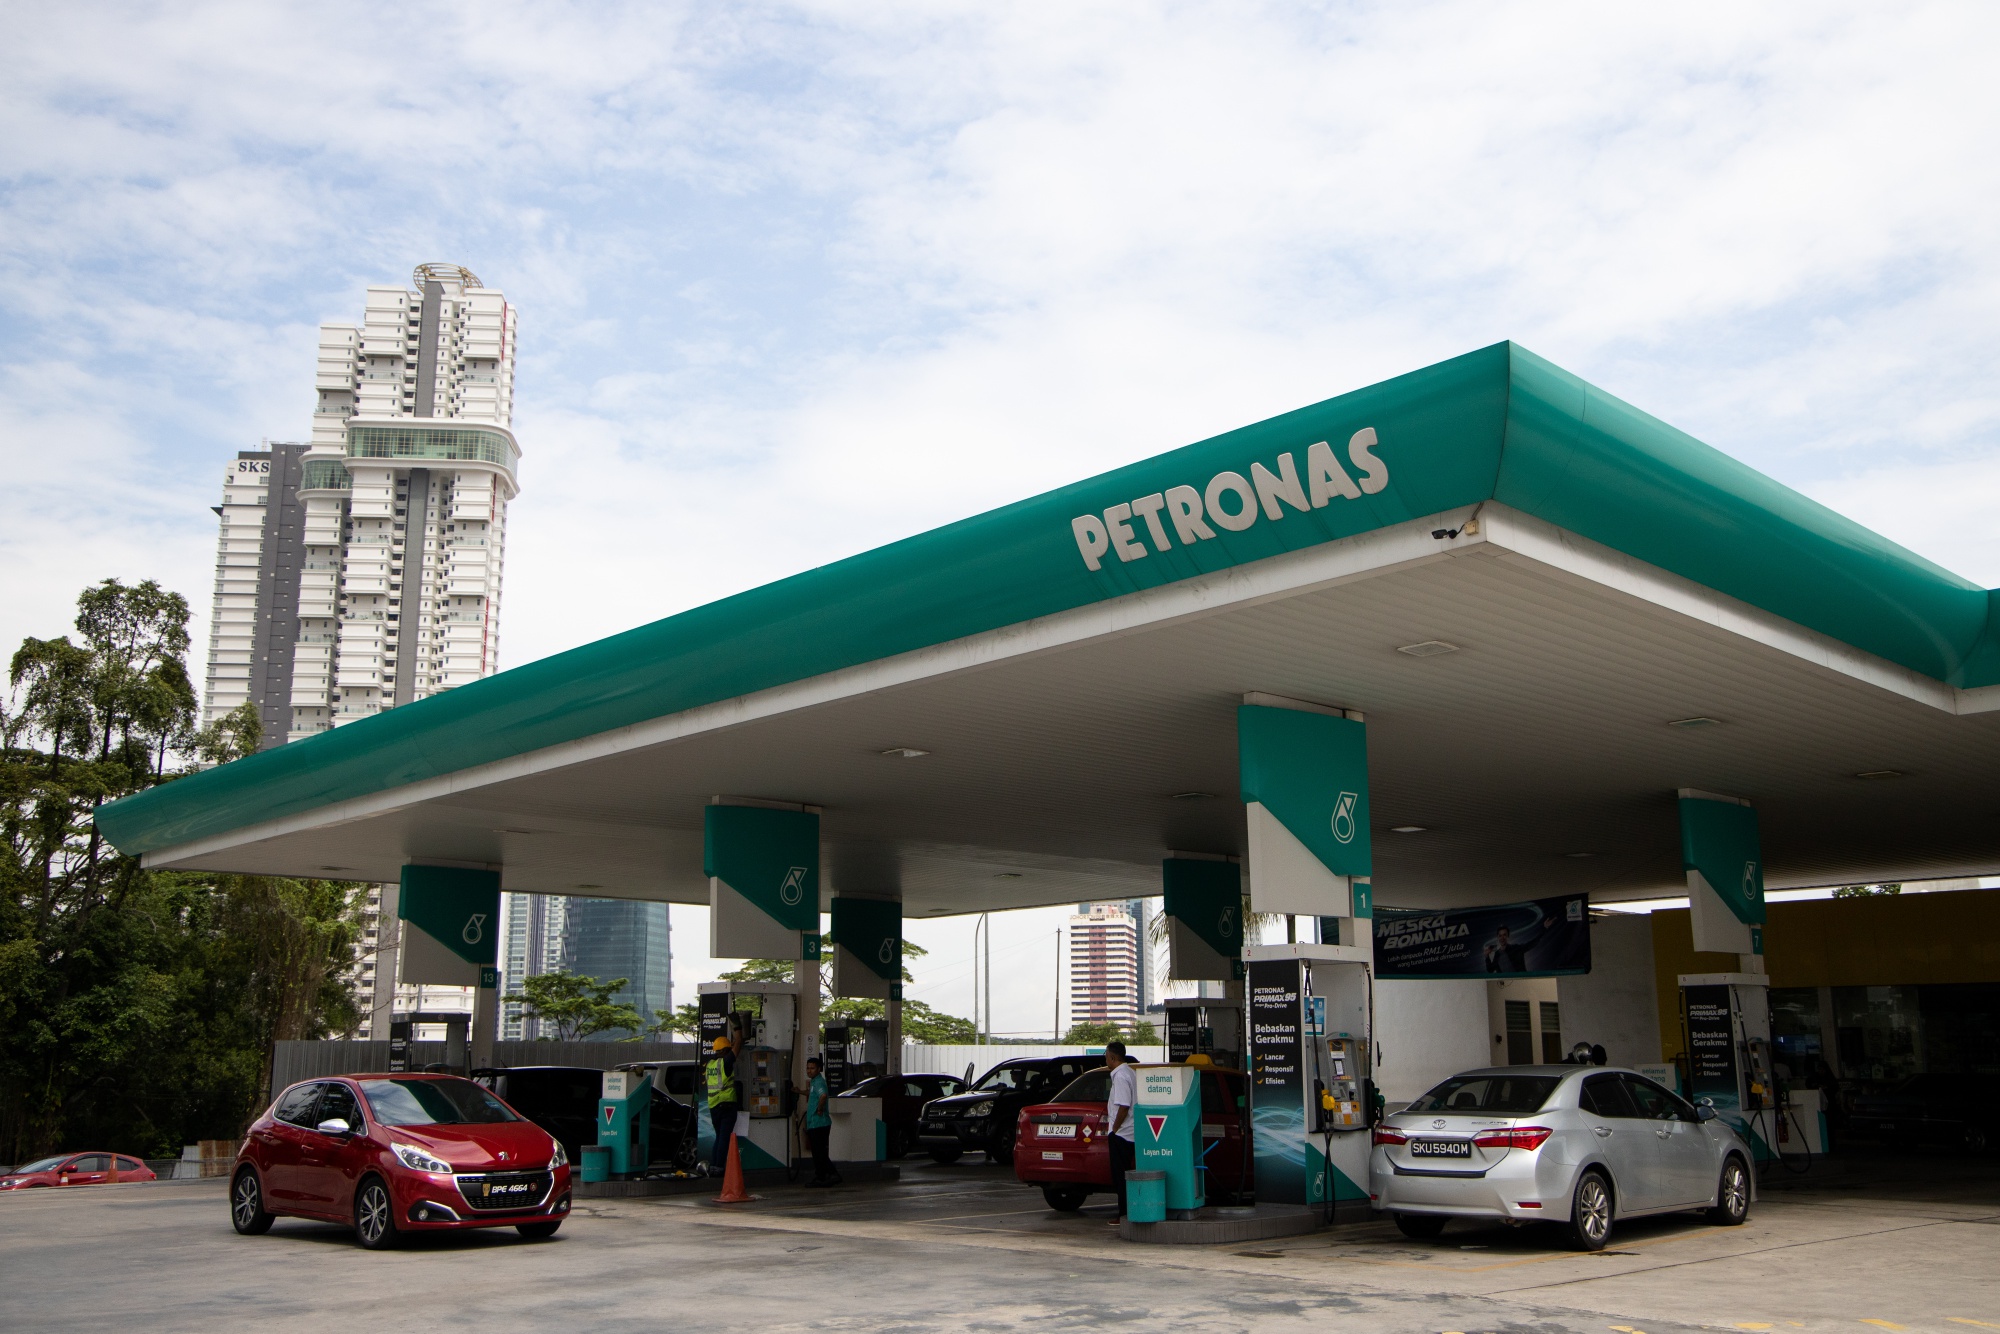 Green unit. Petronas. Petronas банк. Petronas офис в Ашхабаде. Petronas вывеска.